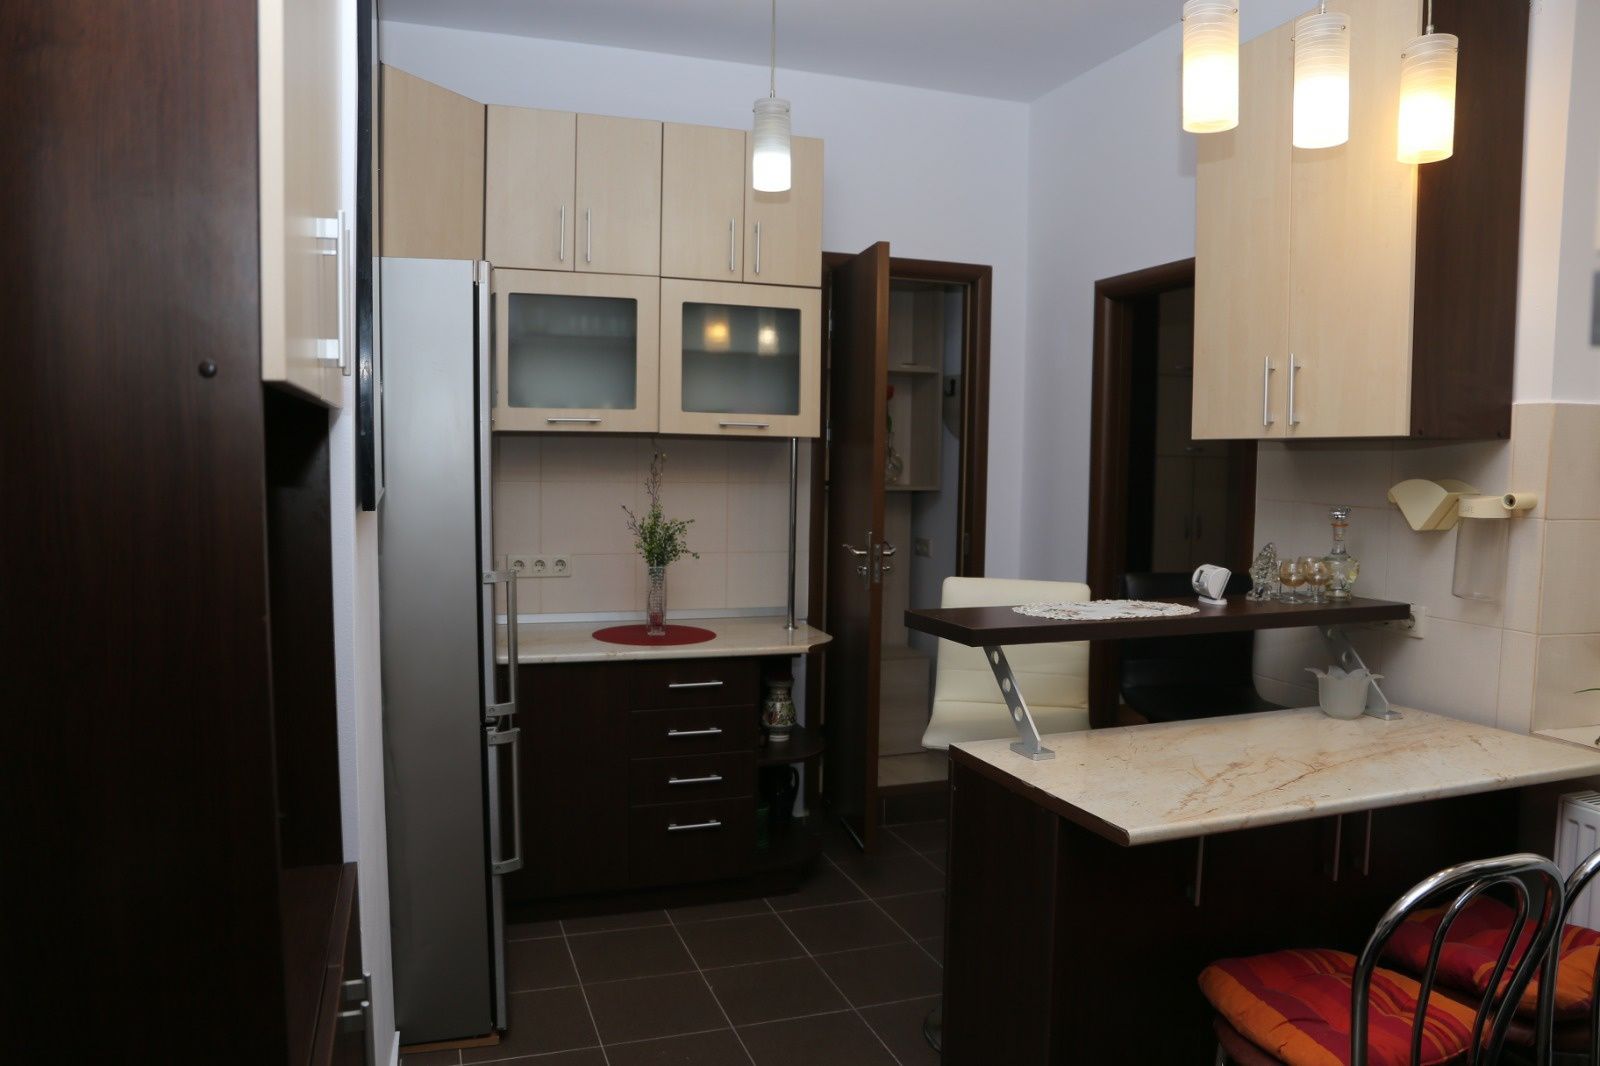 Apartament in regim hotelier 3 camere bucătarie baie,zona pietonala